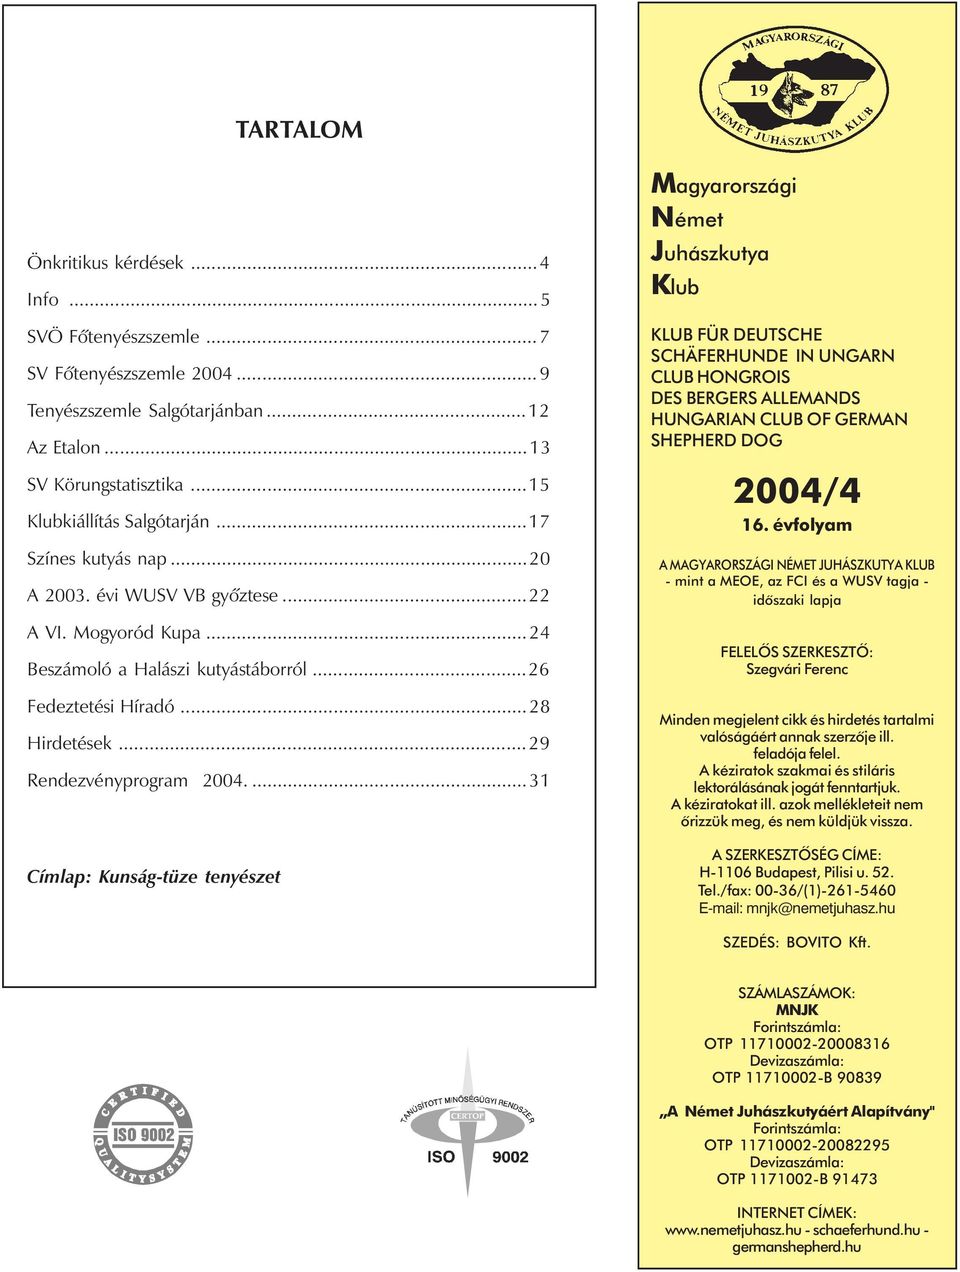 ...31 Címlap: Kunság-tüze tenyészet Magyarországi Német Juhászkutya Klub KLUB FÜR DEUTSCHE SCHÄFERHUNDE IN UNGARN CLUB HONGROIS DES BERGERS ALLEMANDS HUNGARIAN CLUB OF GERMAN SHEPHERD DOG 2004/4 16.